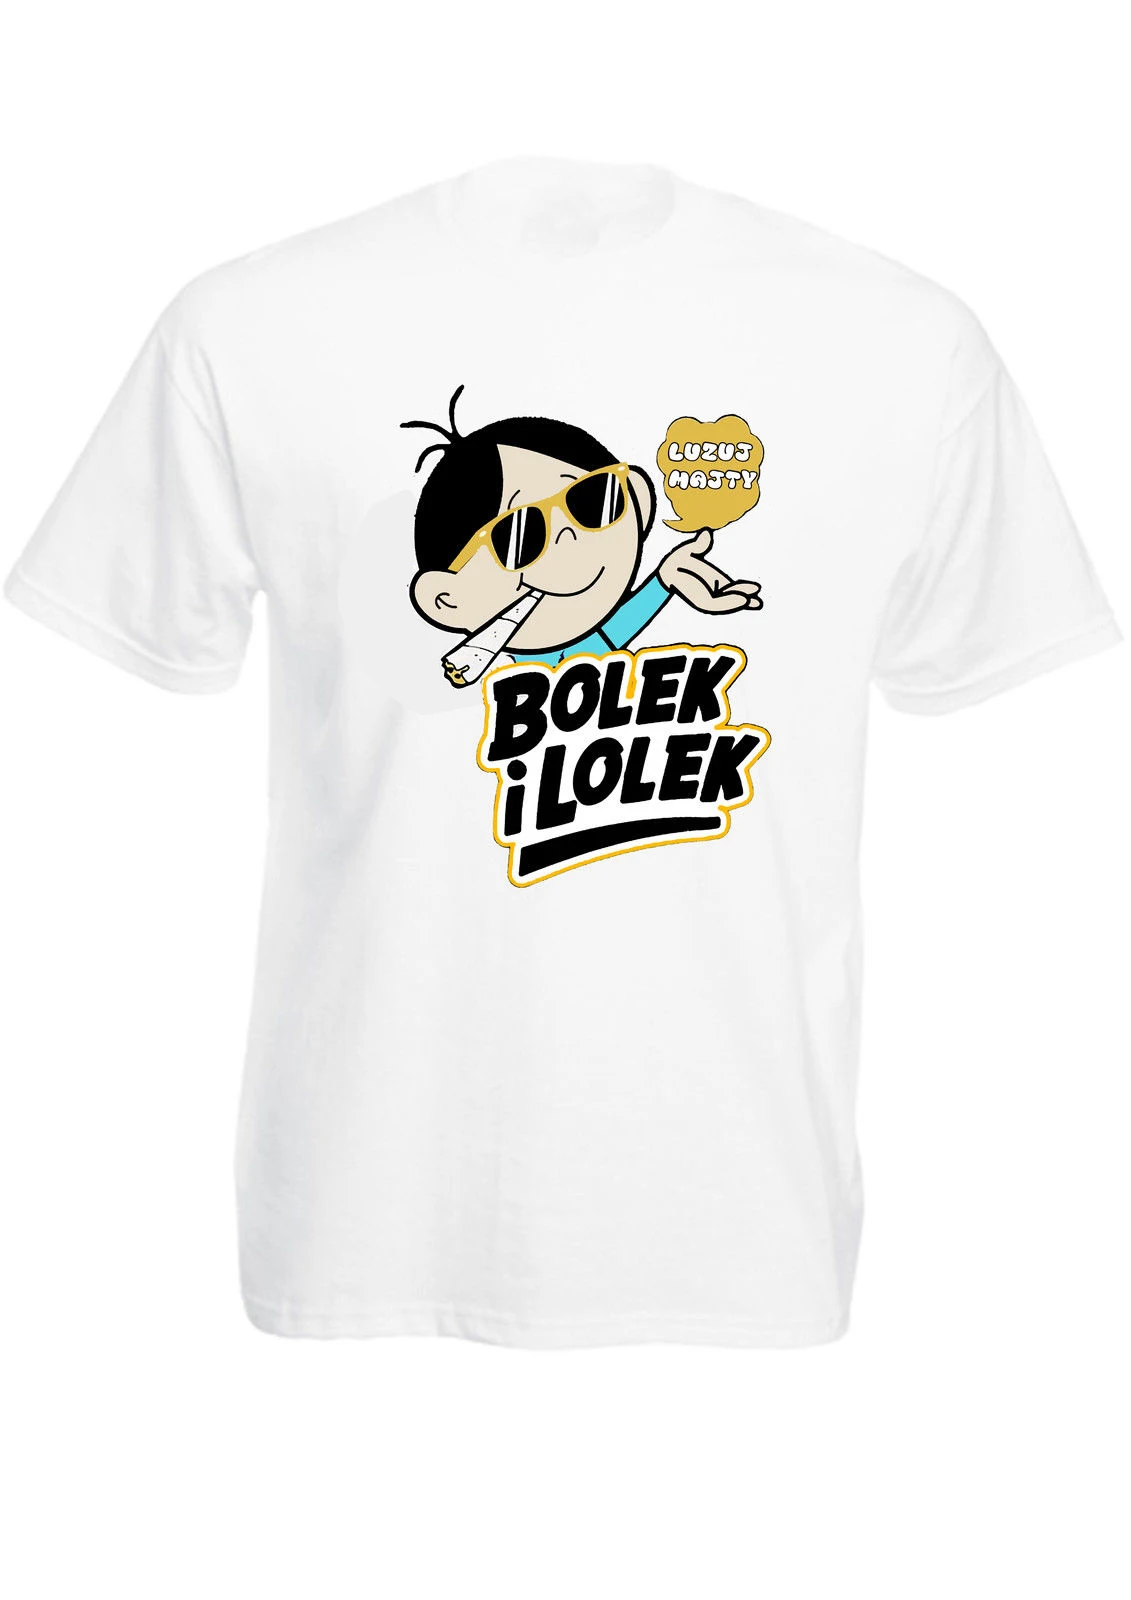 Bolek I Lolek Poland Koszulka Smieszna Polish T-shirt Polska Bajki Prl  Prezent New Fashion Casual Cotton Short-sleeve - T-shirts - AliExpress